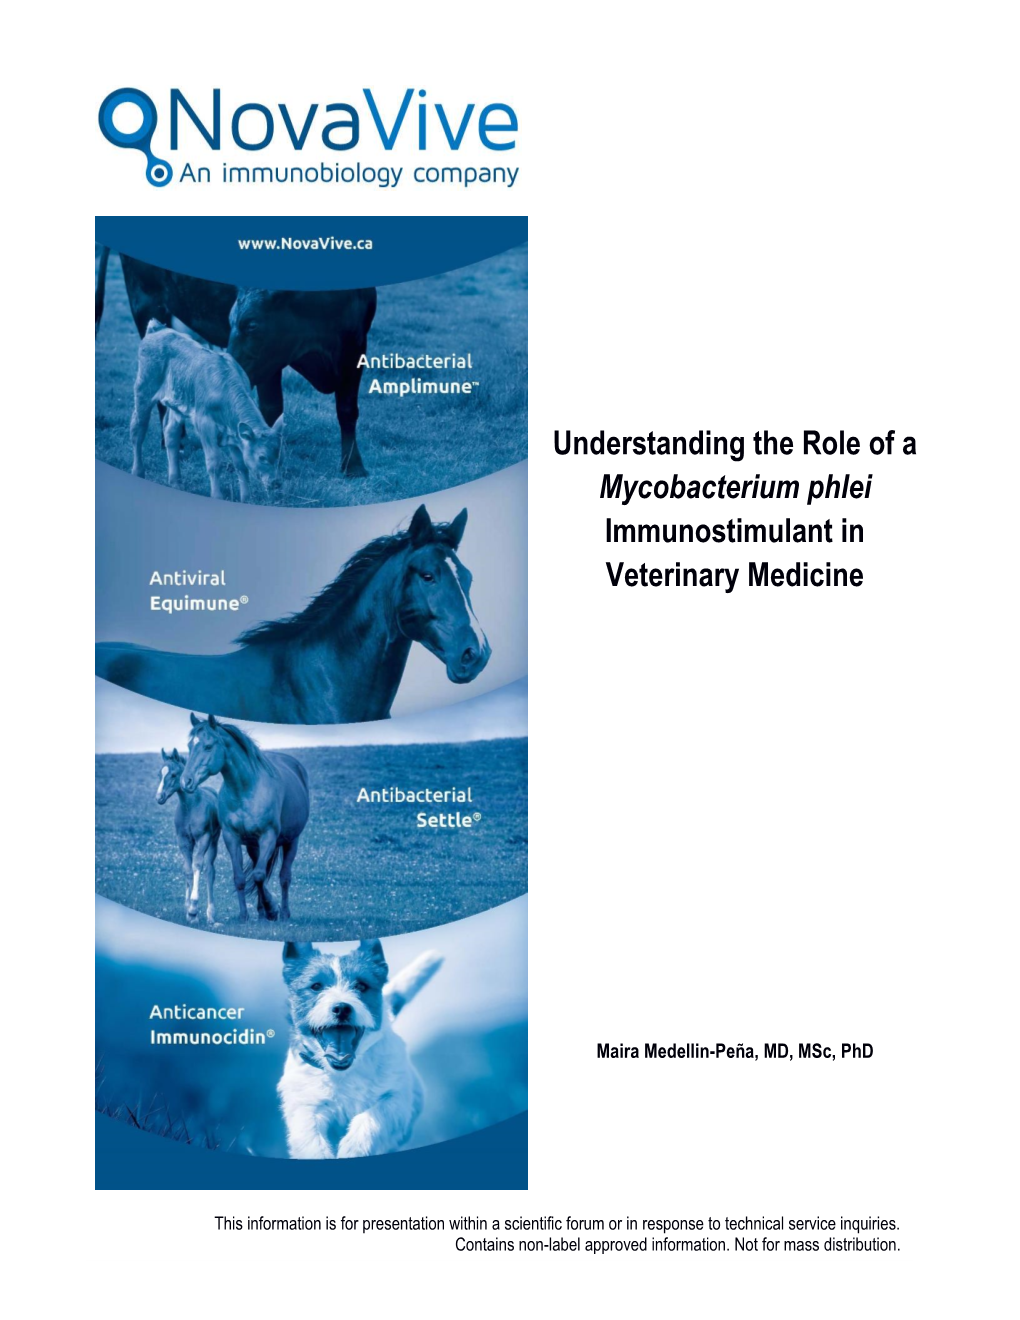 Understanding the Role of a Mycobacterium Phlei Immunostimulant in Veterinary Medicine